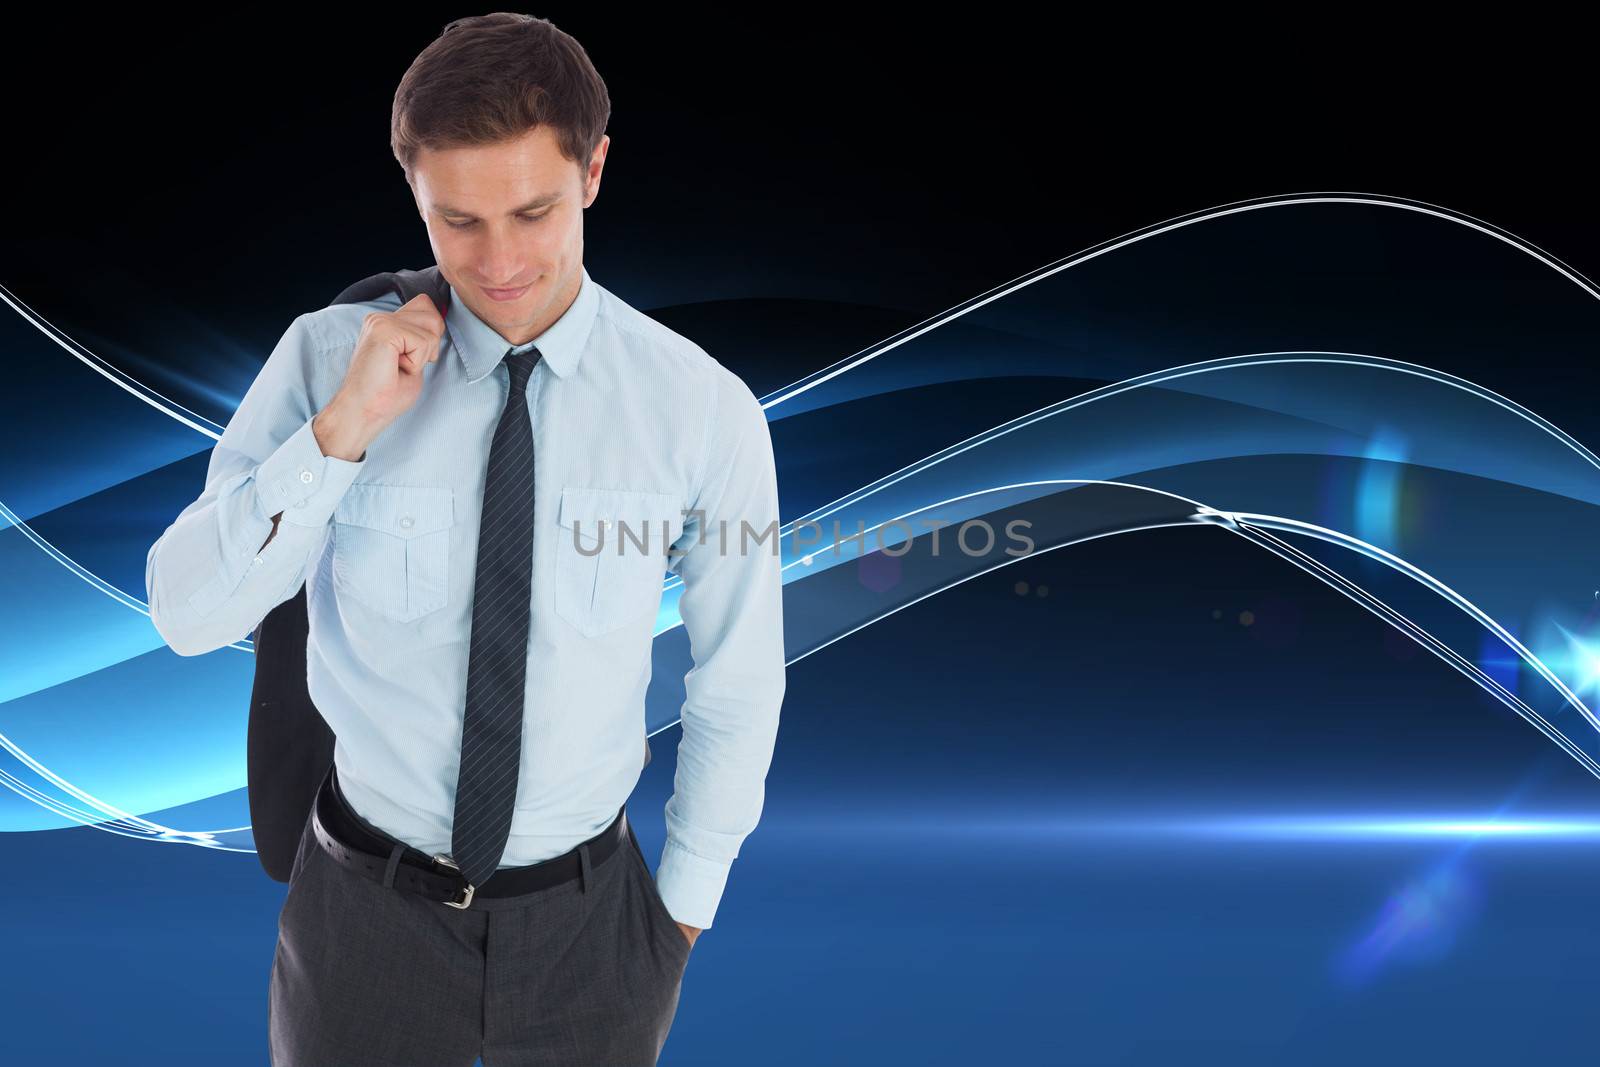 Composite image of smiling businessman holding his jacket by Wavebreakmedia